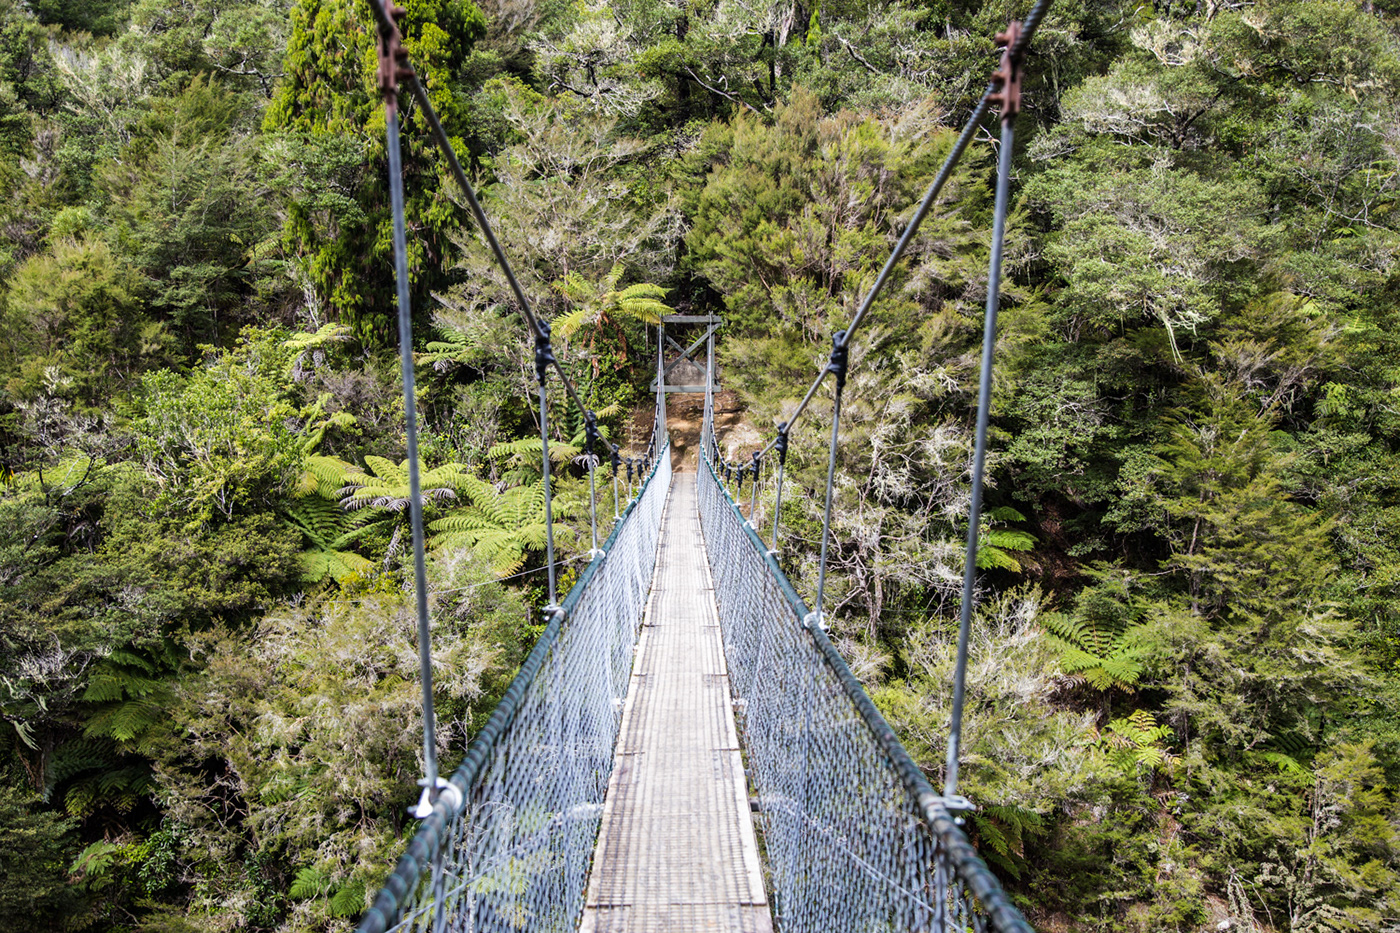 New Zealand landscape photography digital photography  Travel journey Nature guanghzou travel photography